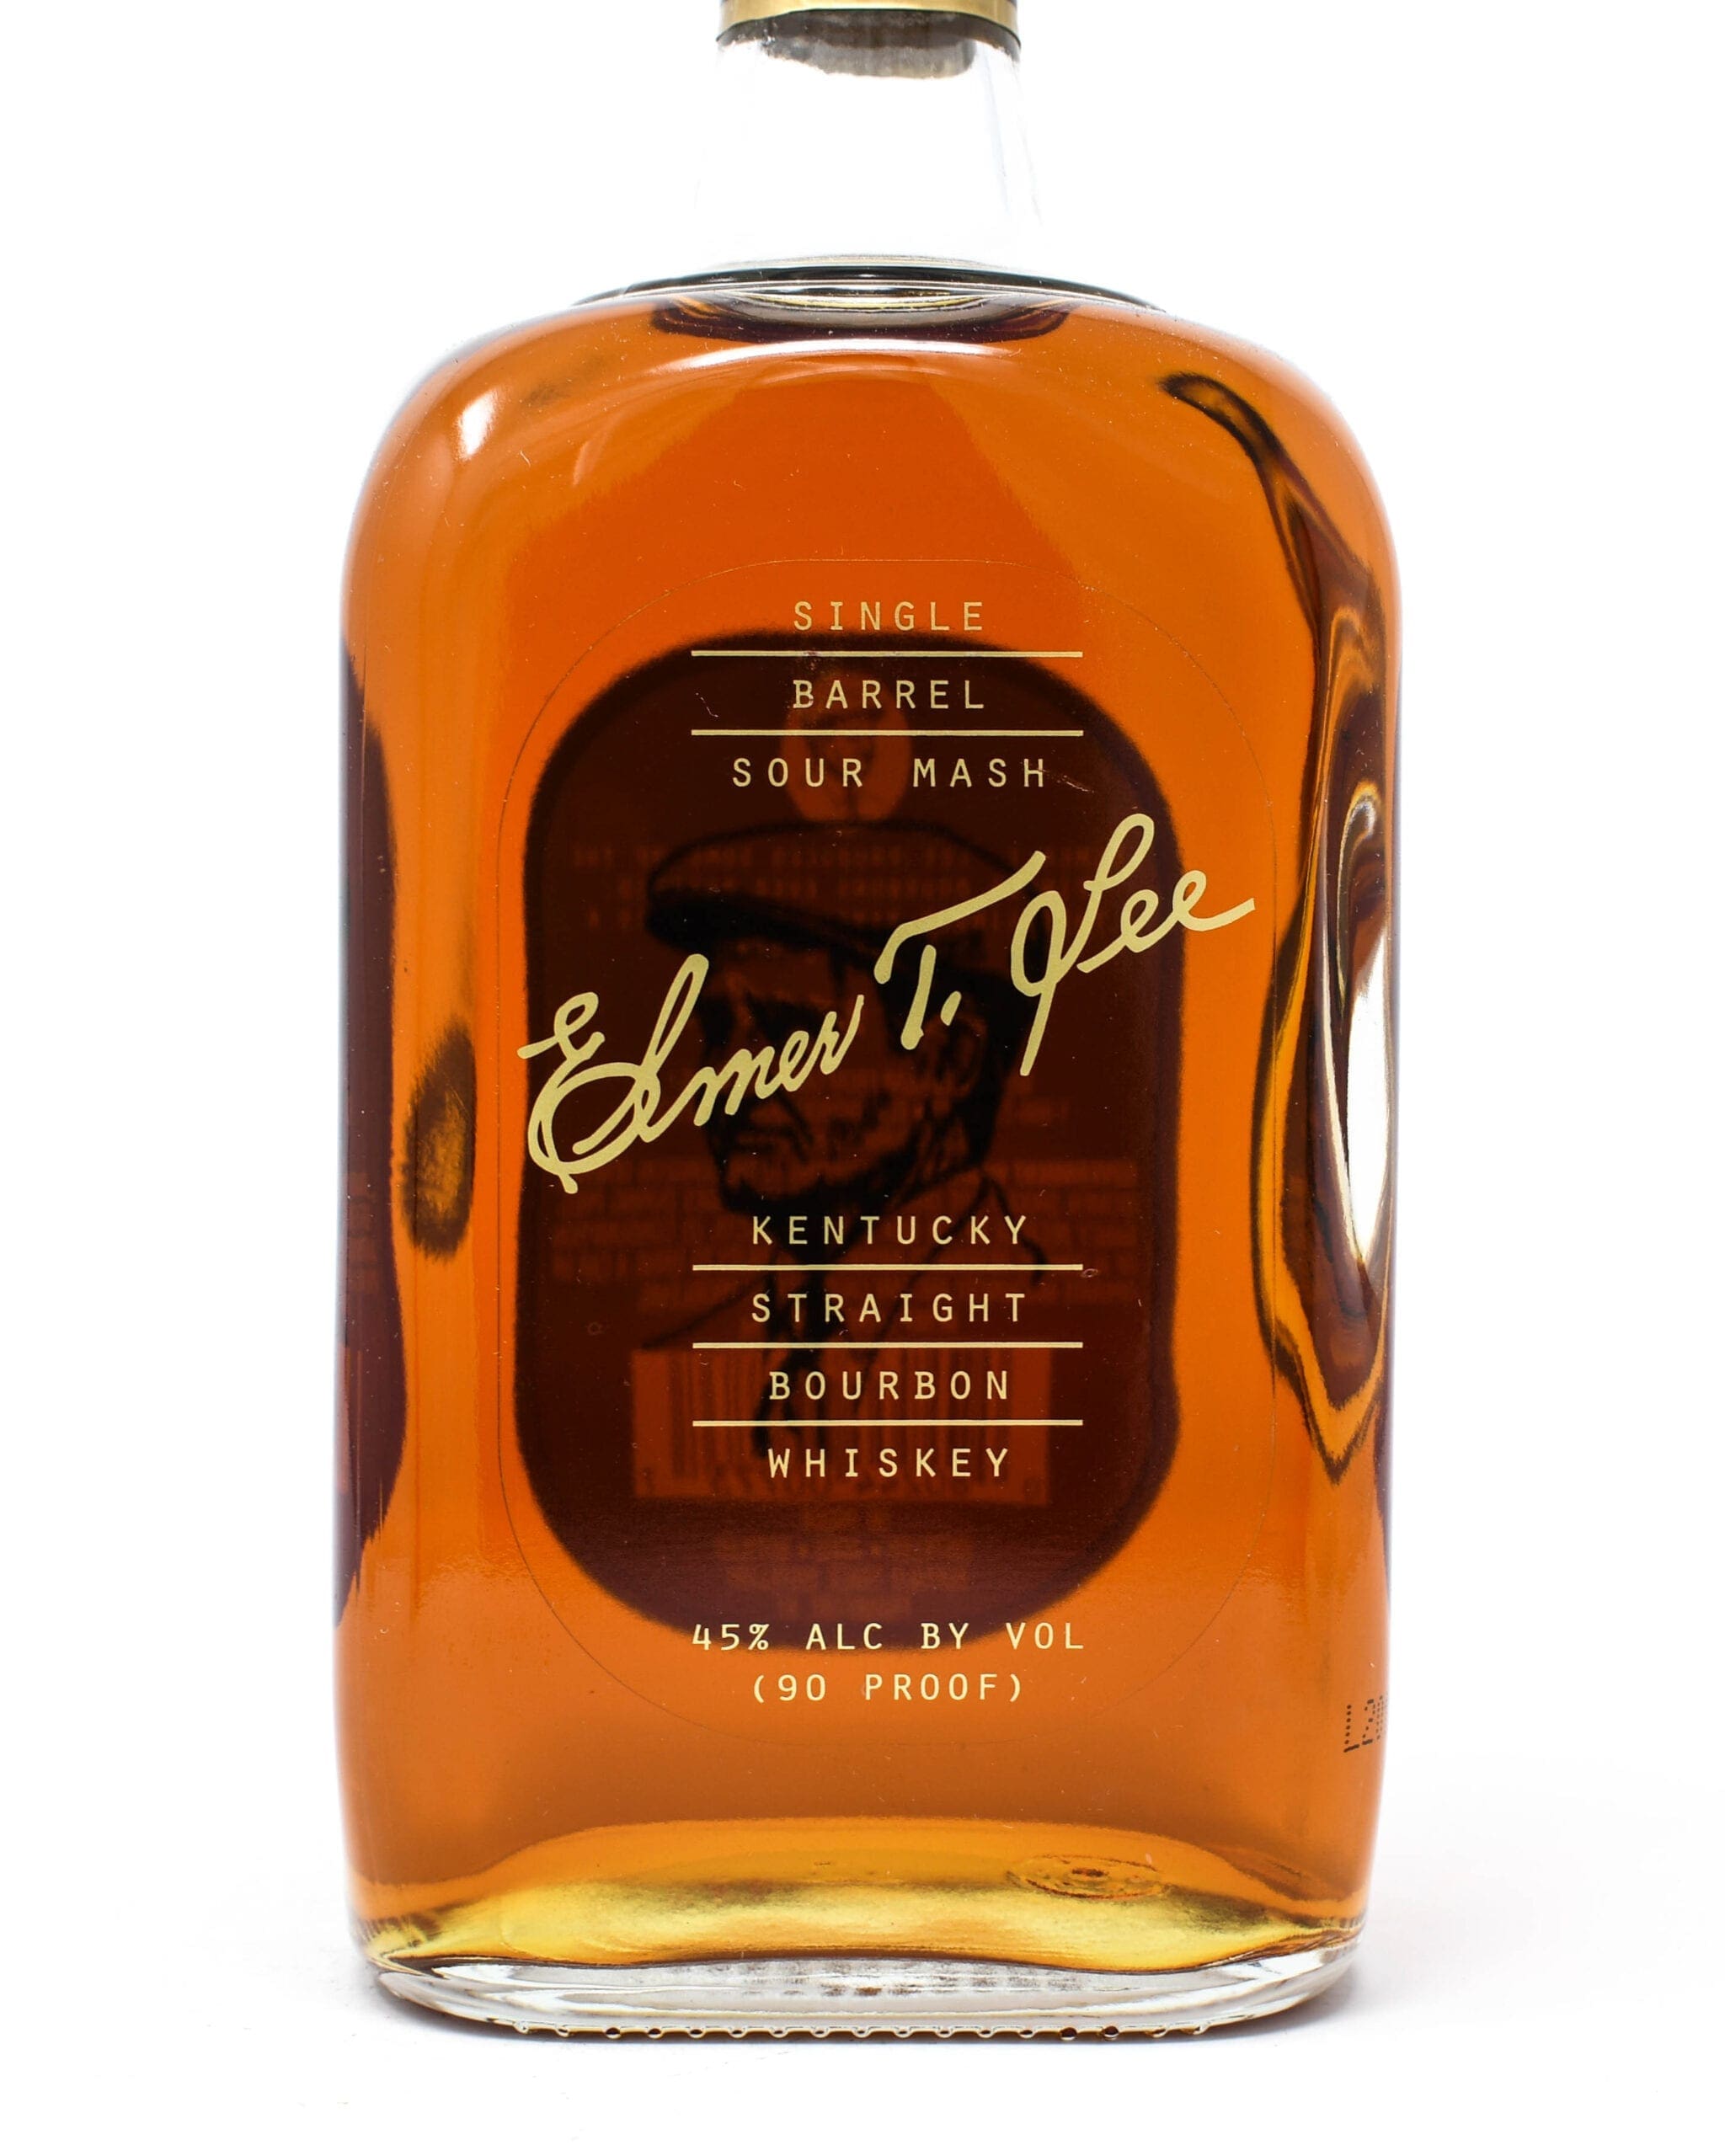 Elmer T. Lee, Single Barrel Sour Mash, Kentucky Straight Bourbon Whisky